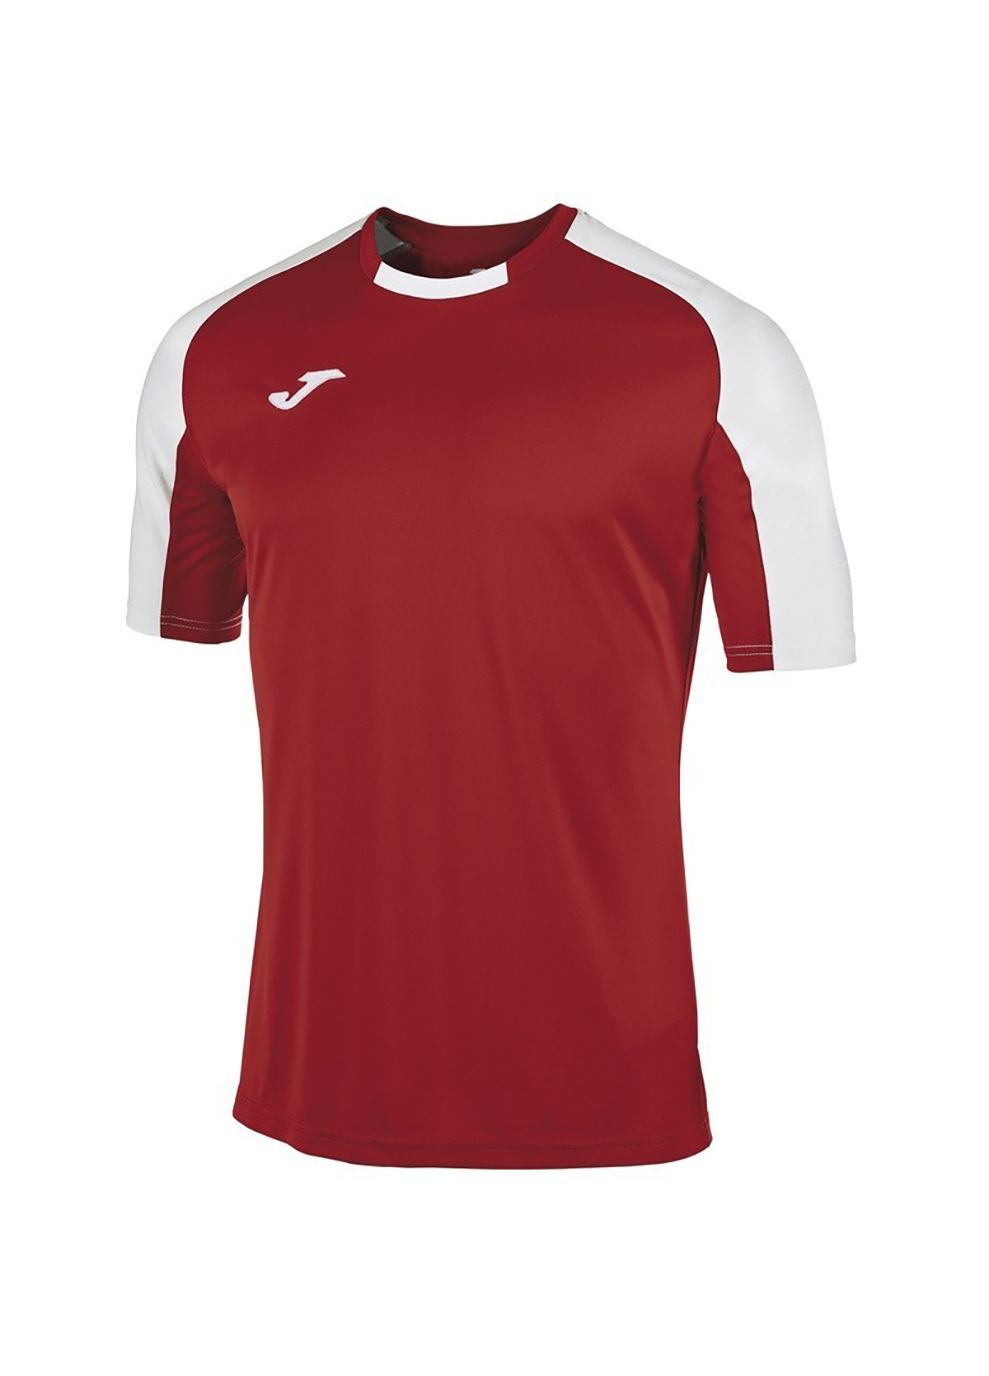 Красная мужская футболка essential красный xs Joma